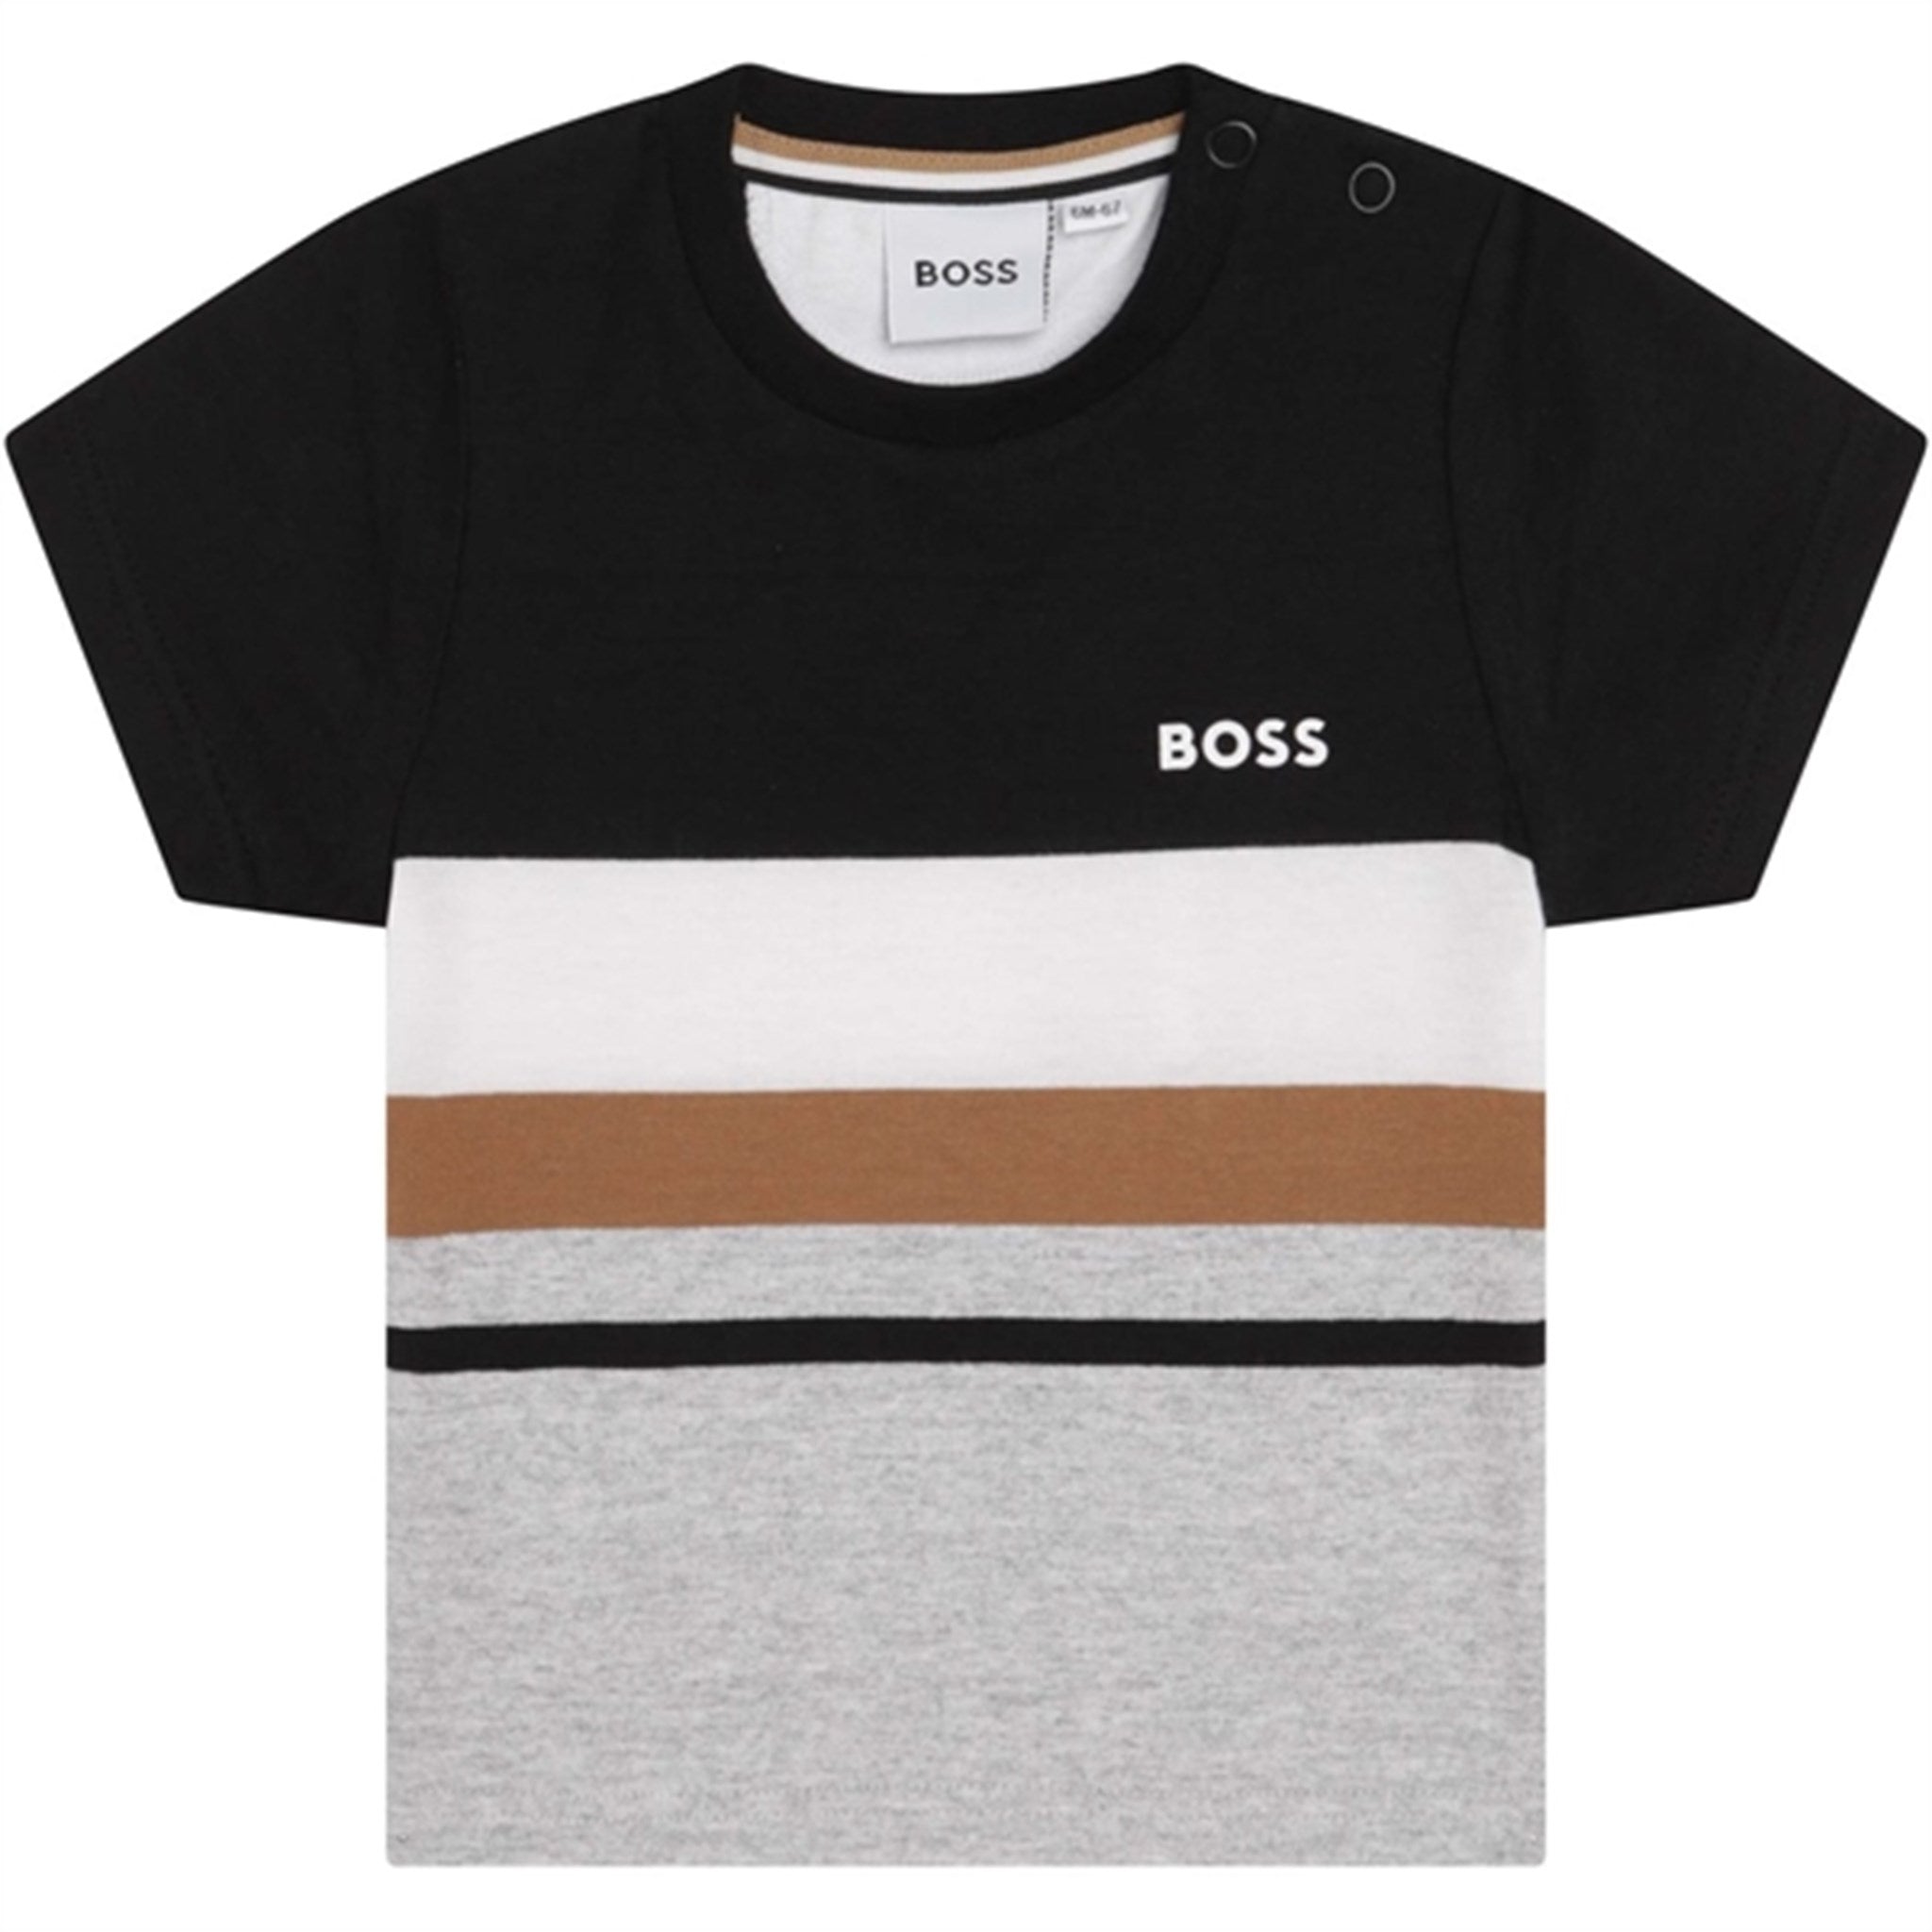 Hugo Boss Baby T-shirt Black